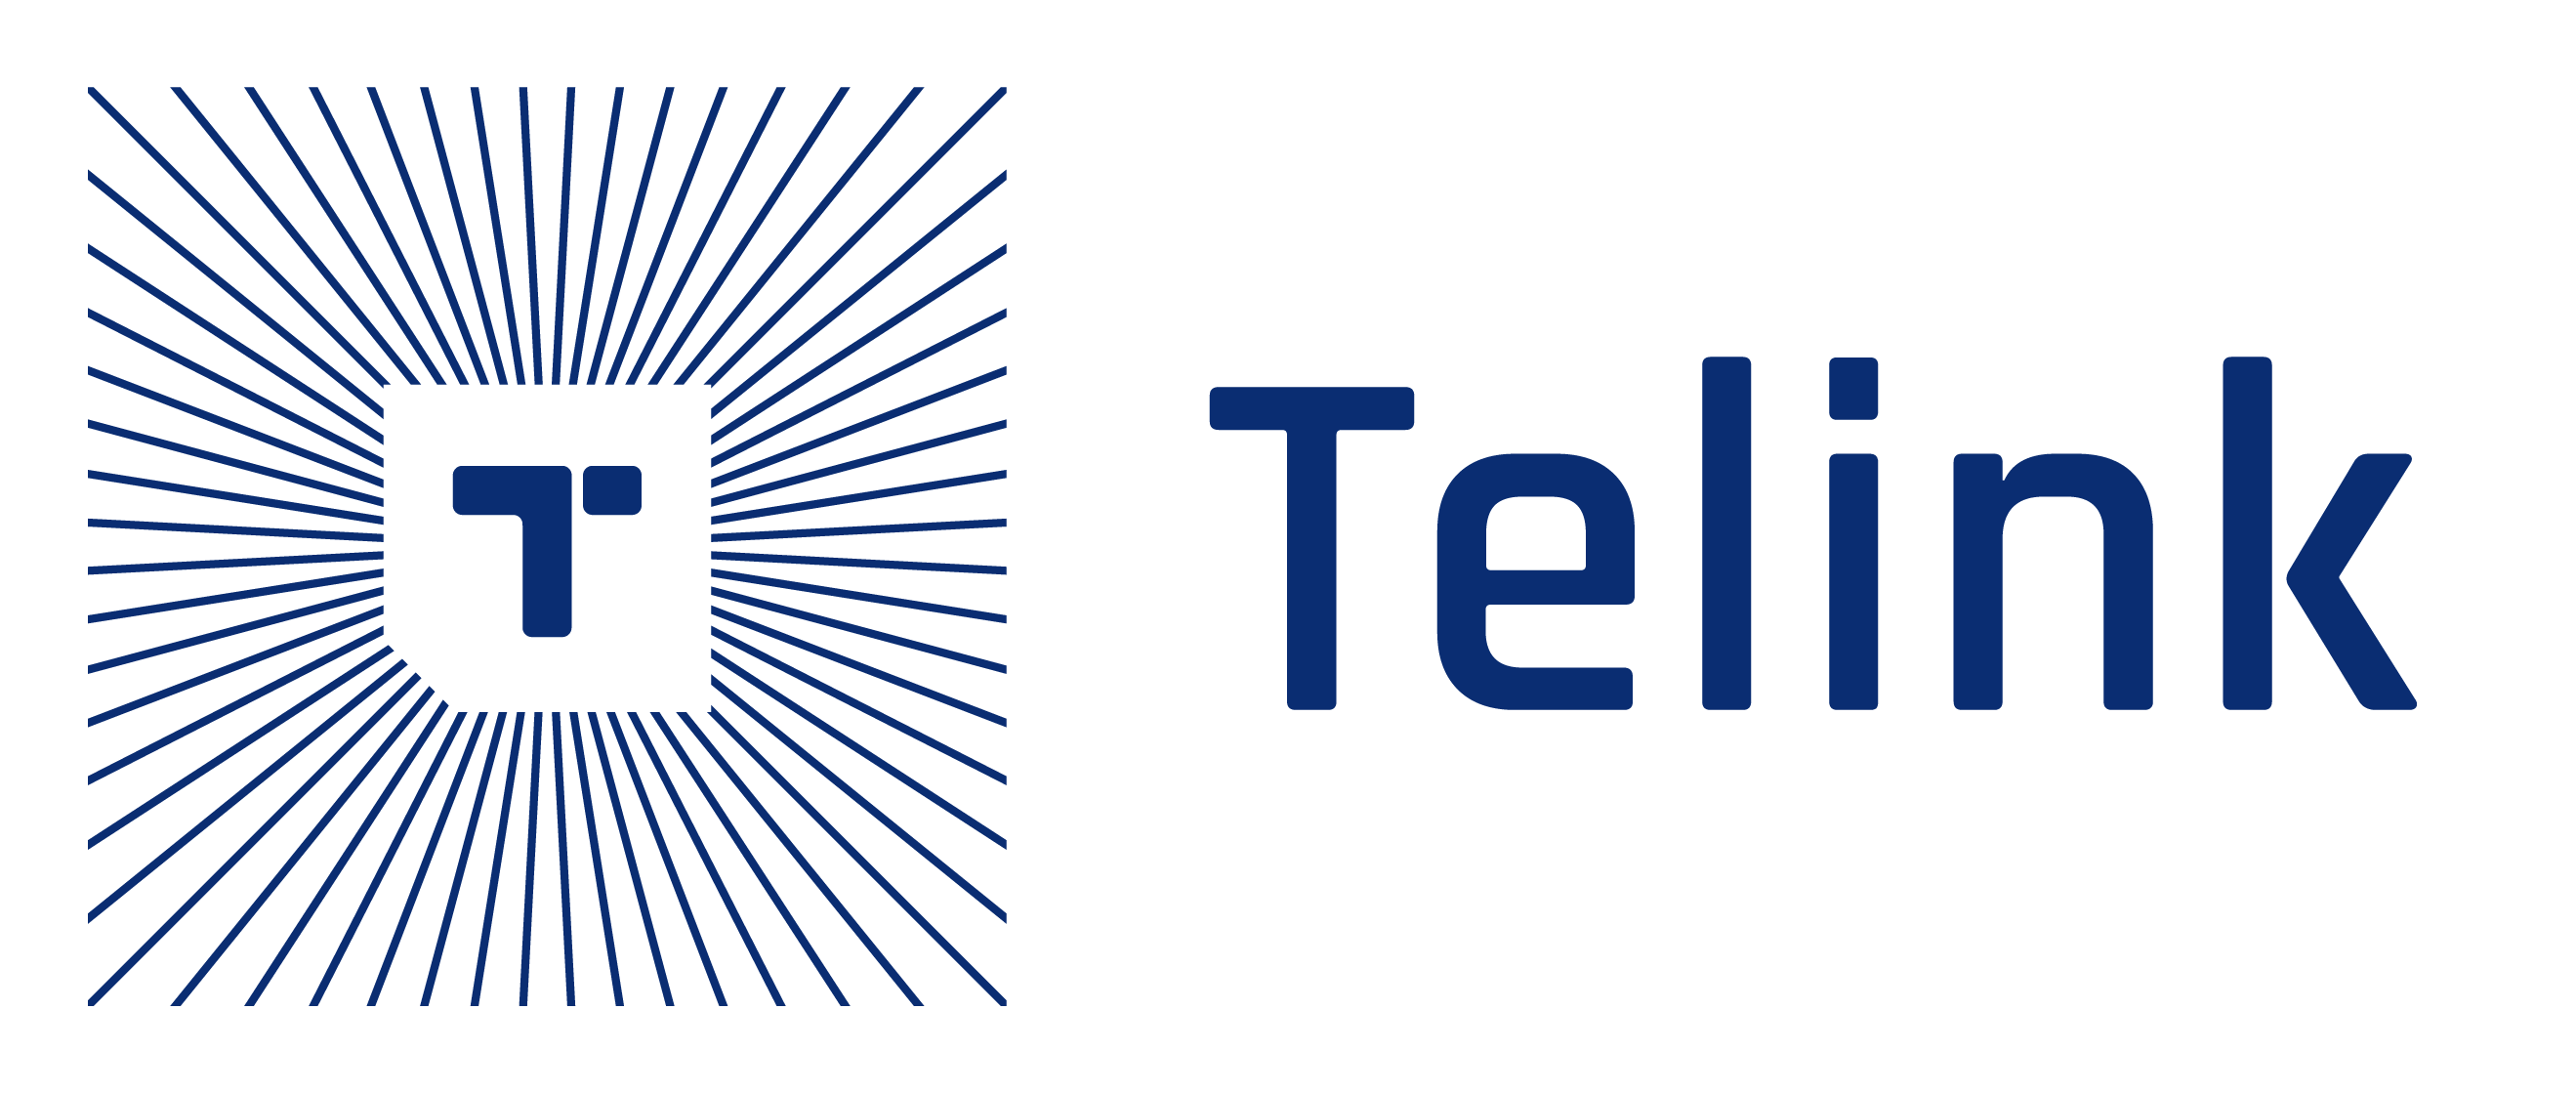 Telink logo